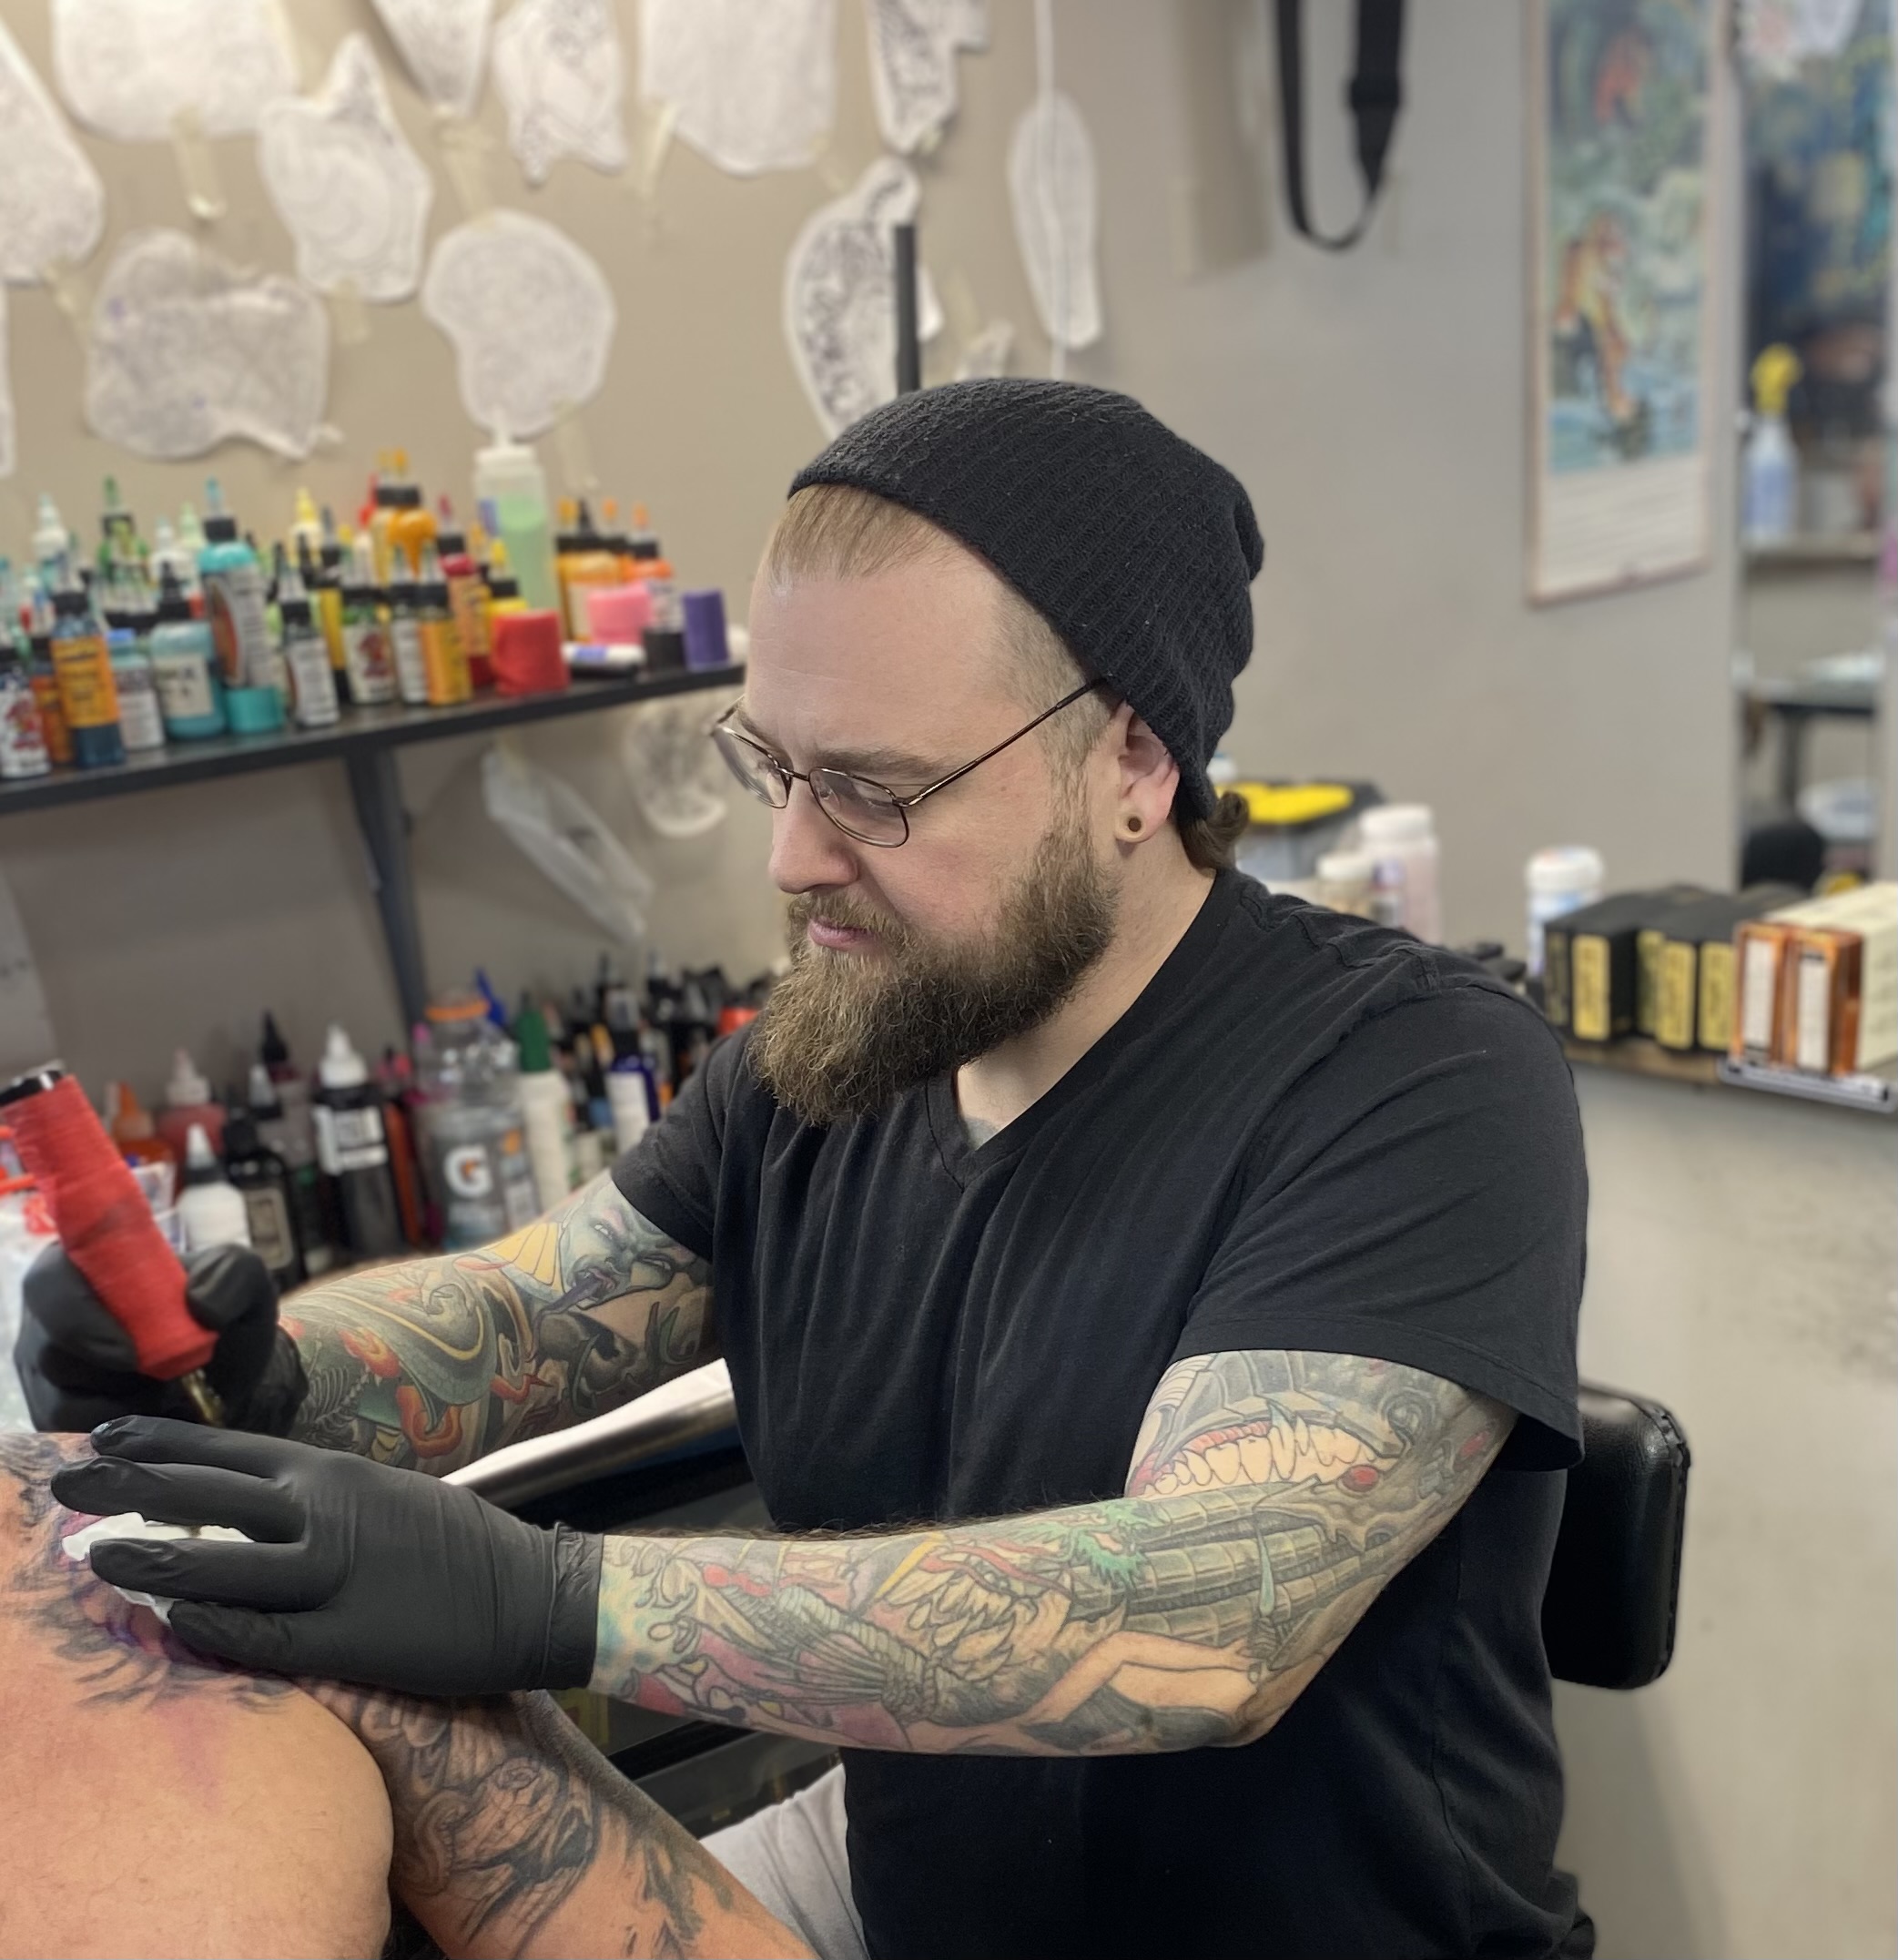 Jason Vogt Tattoos – Custom Tattoo Artist